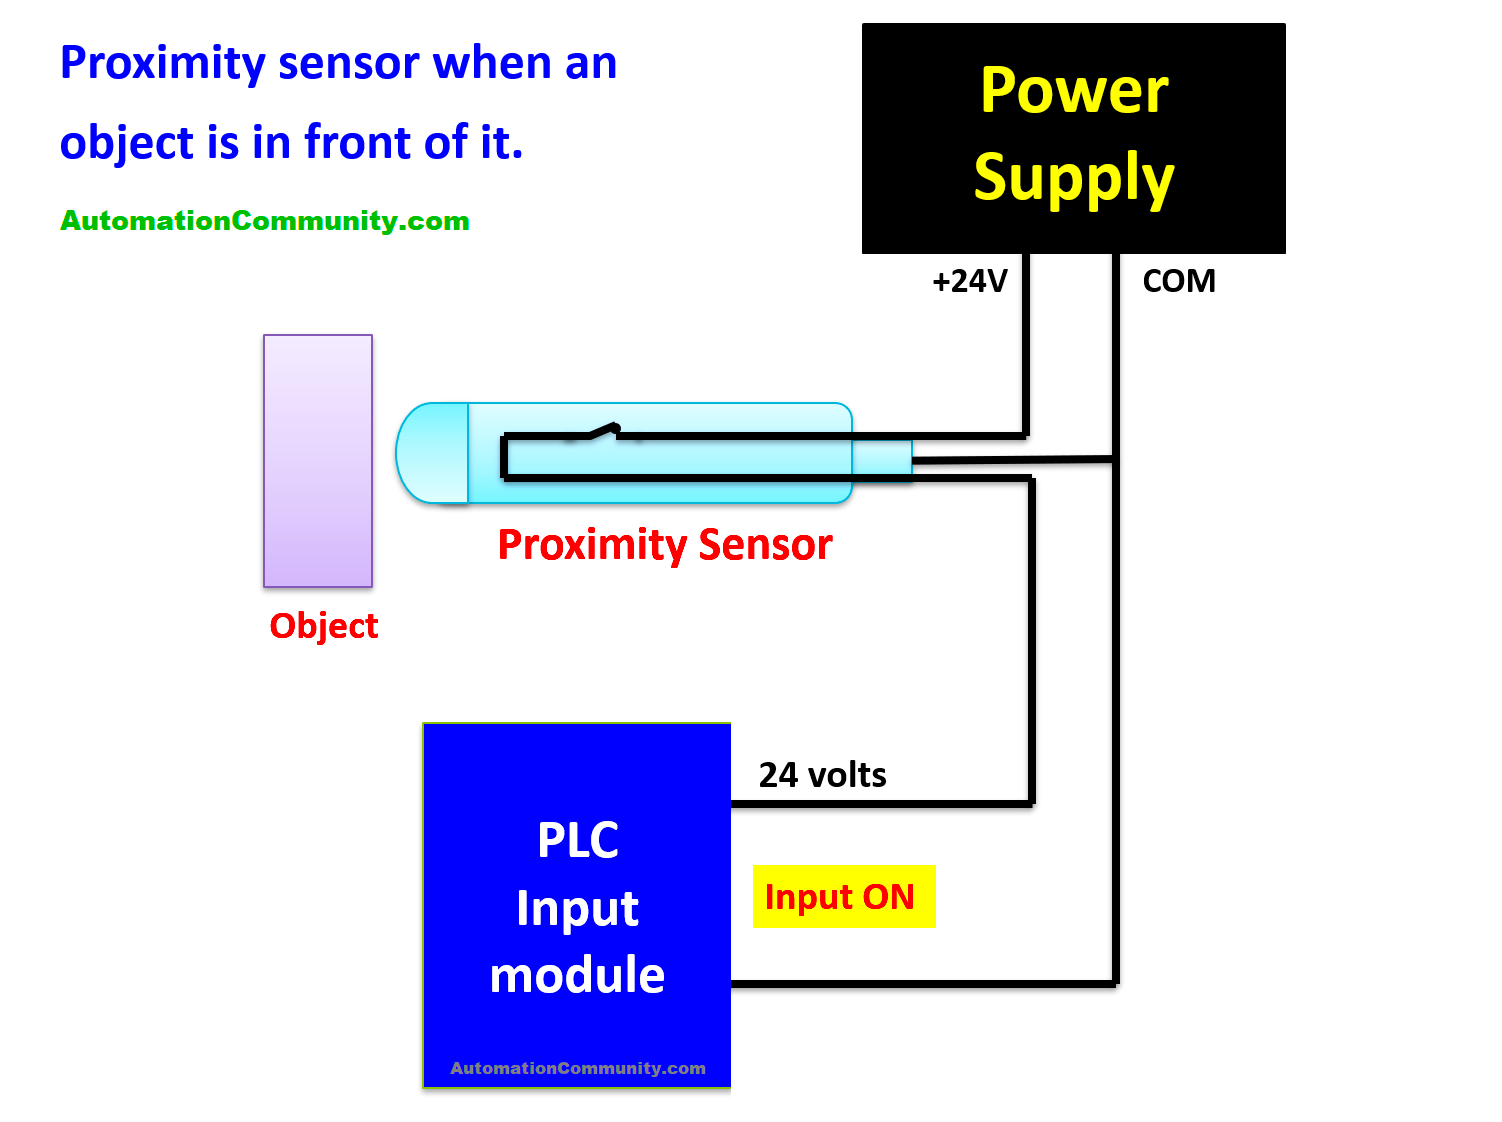 Proximity Sensor Principle of Operation